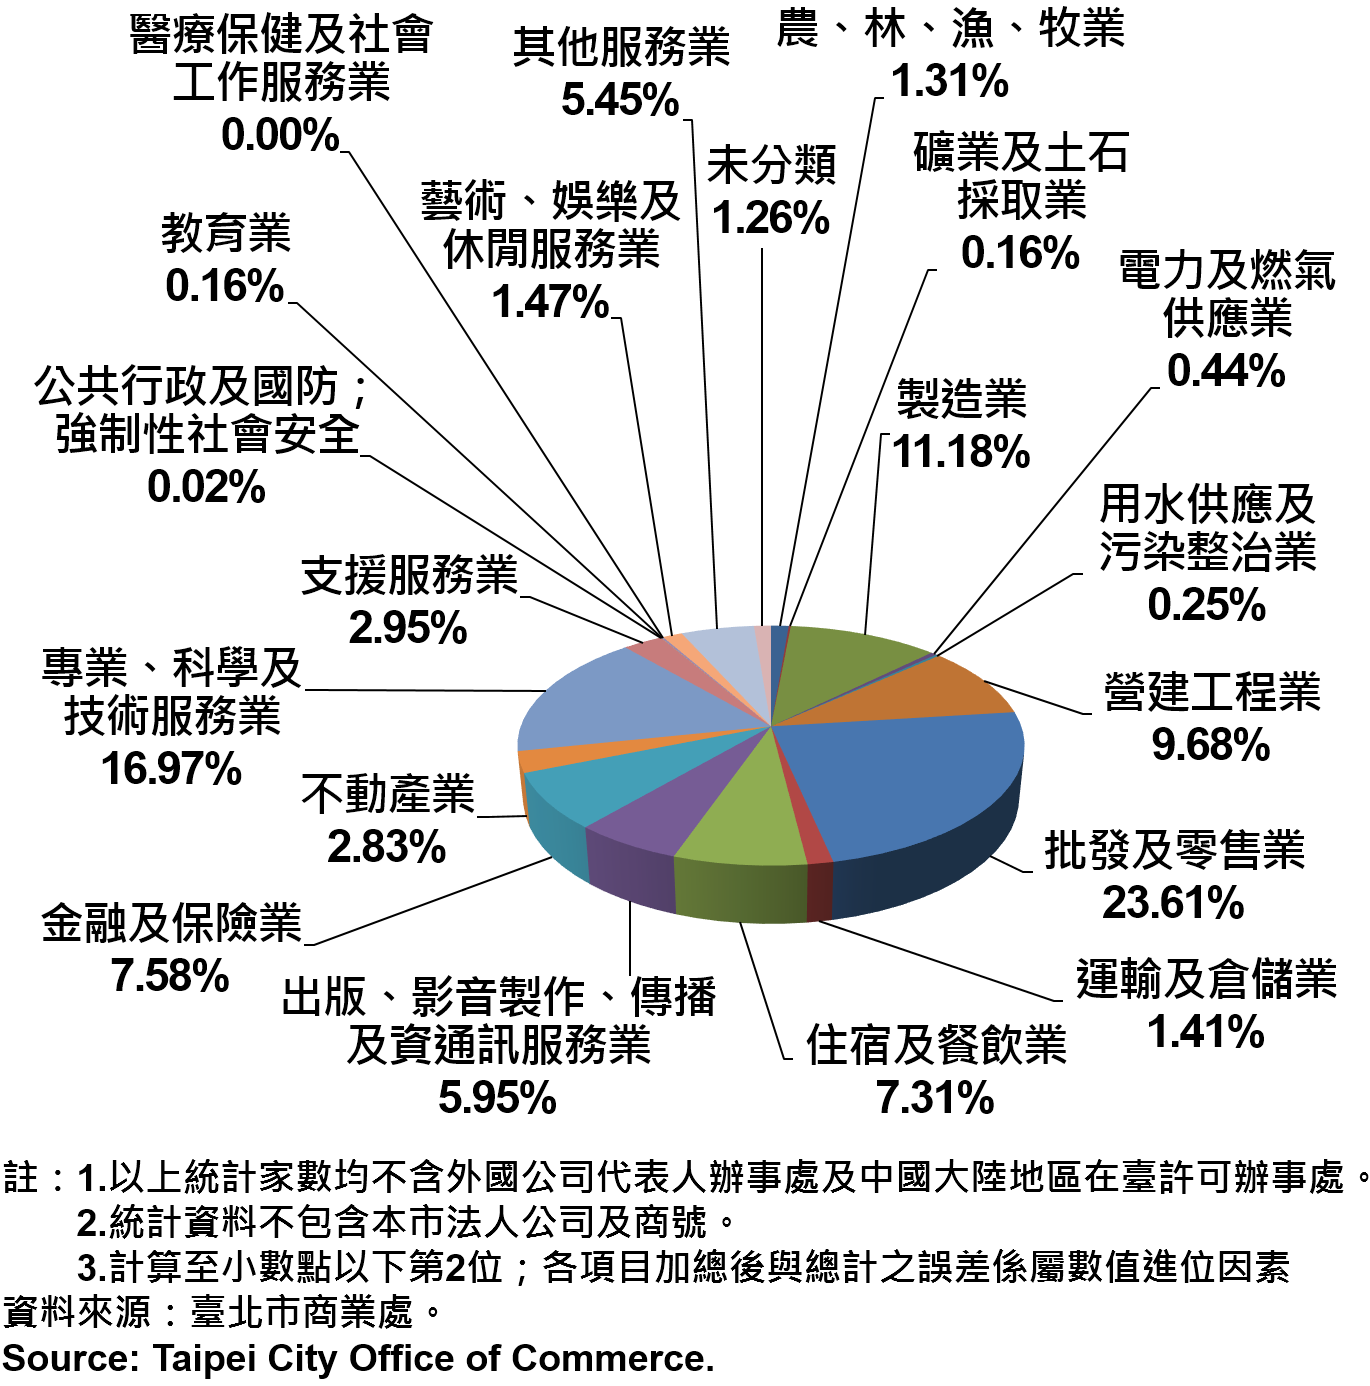 臺北市新創公司行號之業別分布情形—依現存家數—2018Q2 Newly Registered Companies in Taipei City by Industry- Number of Current—2018Q2